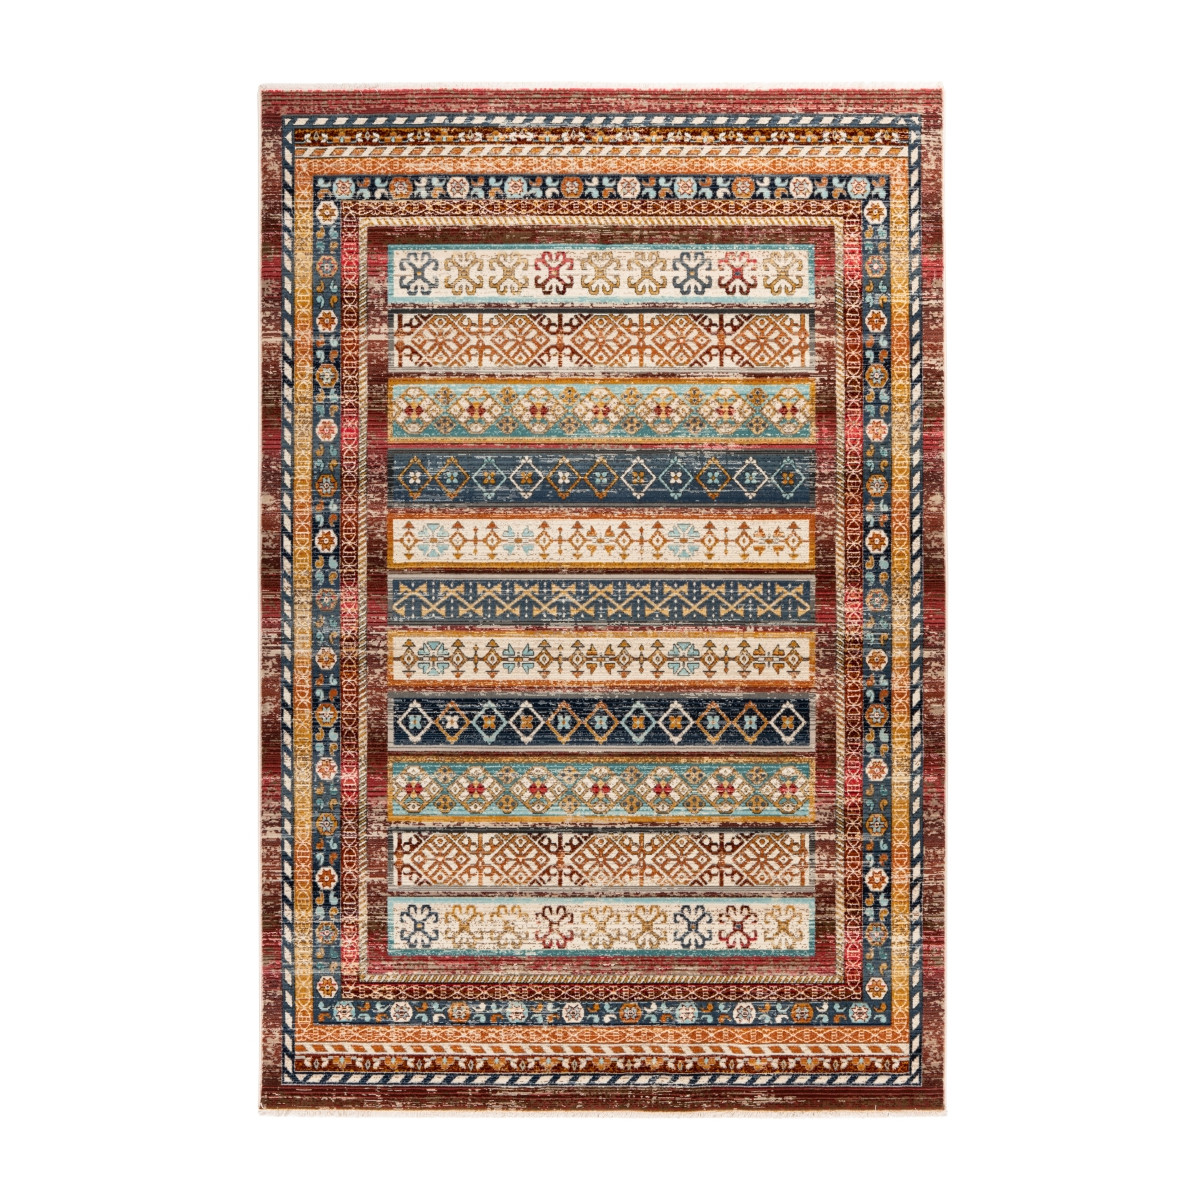 Kusový koberec Inca 361 multi